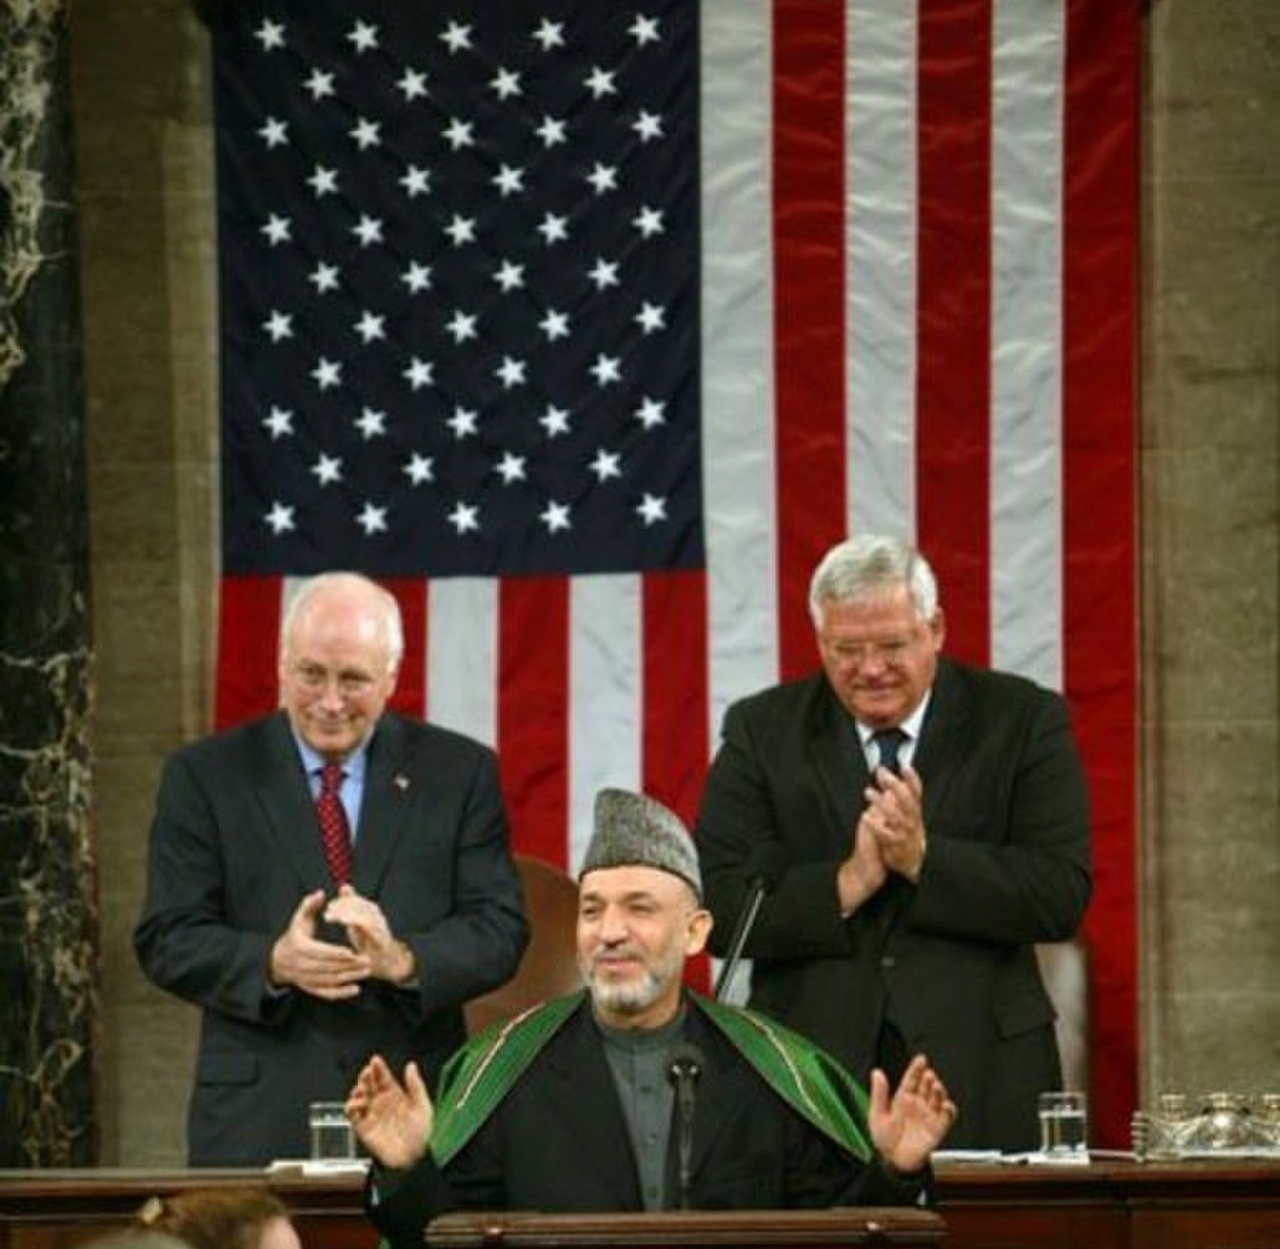 Hamid Karzai speaking before the U.S. Congress, 2004.